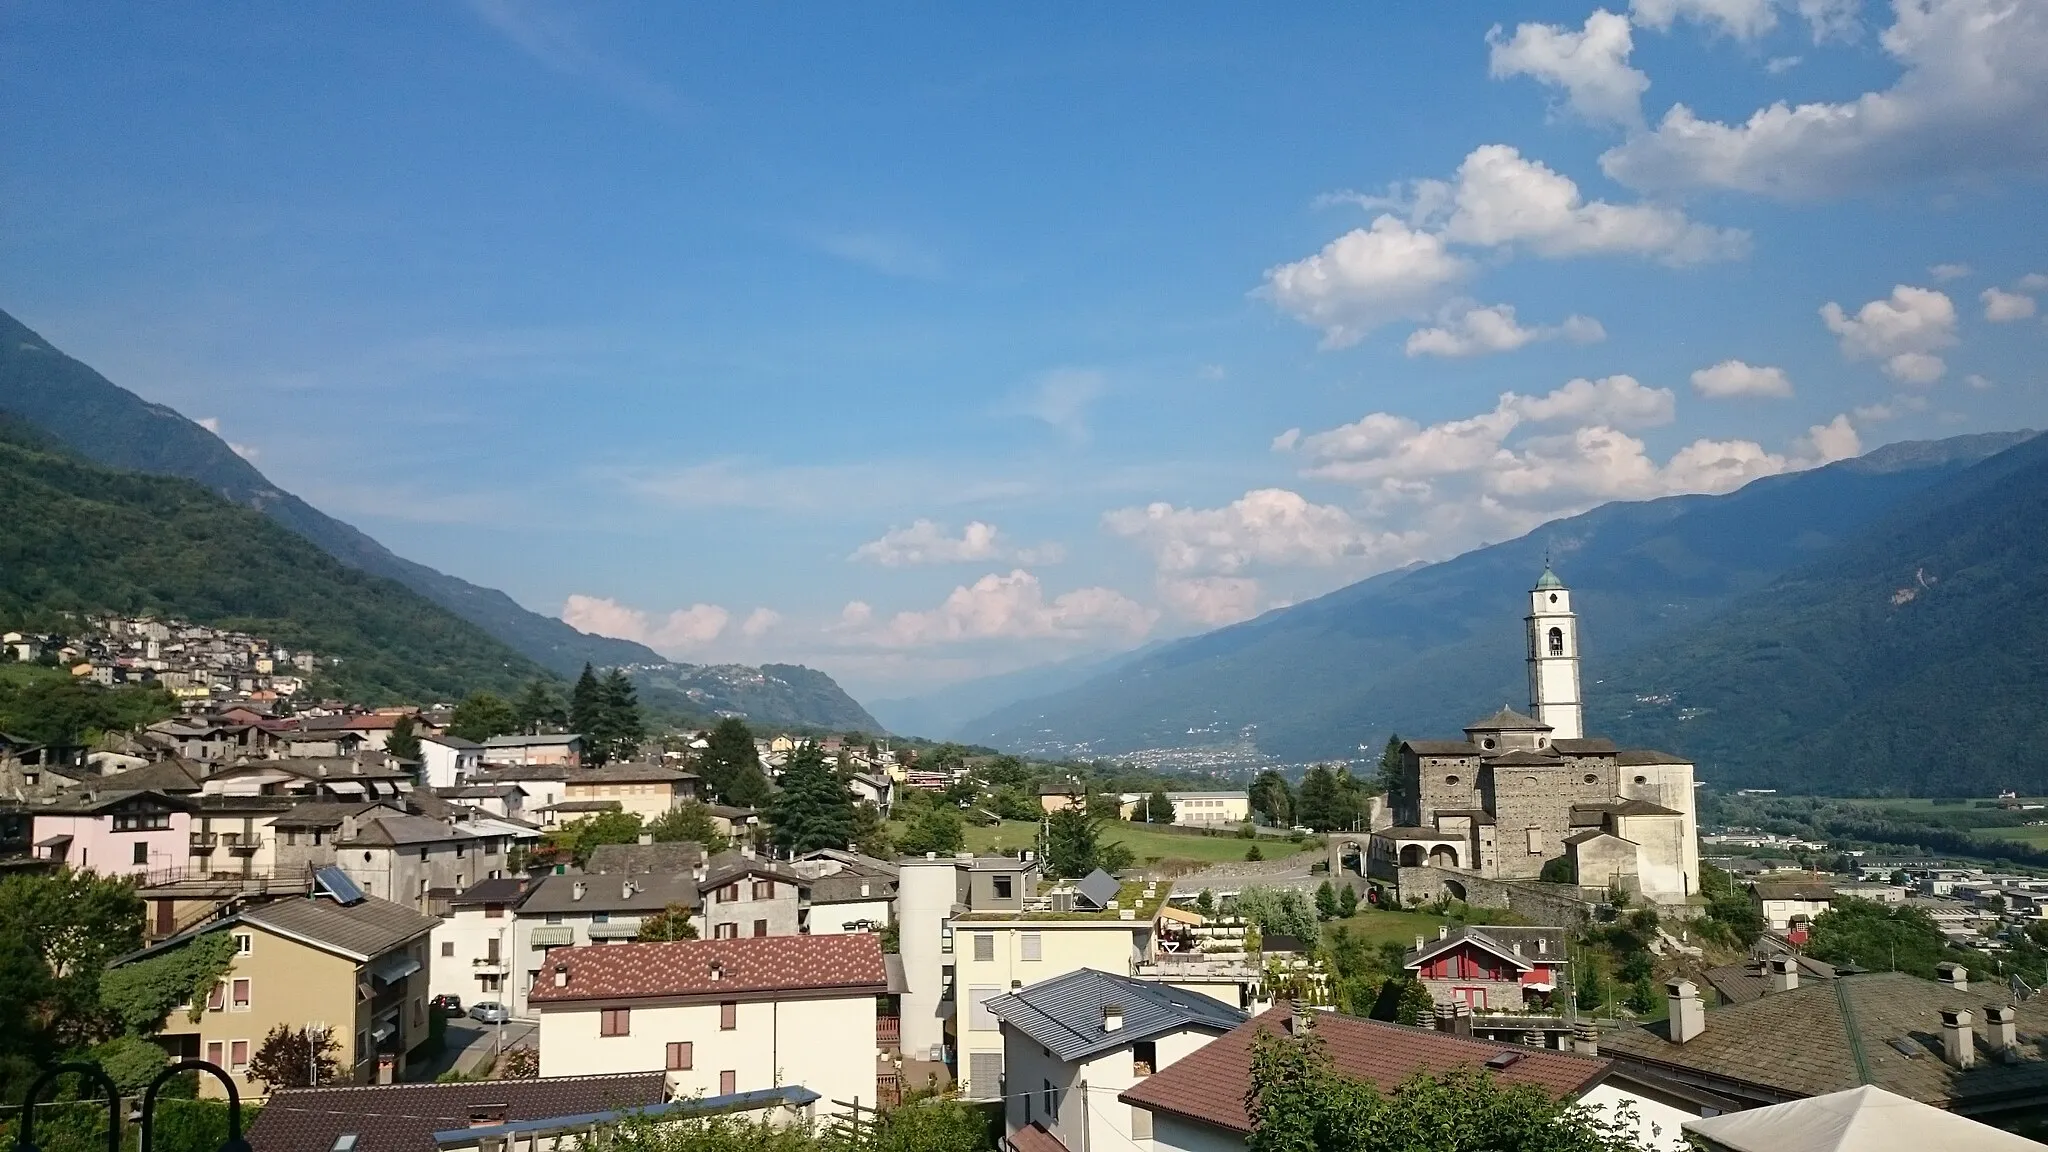 Image de Berbenno di Valtellina